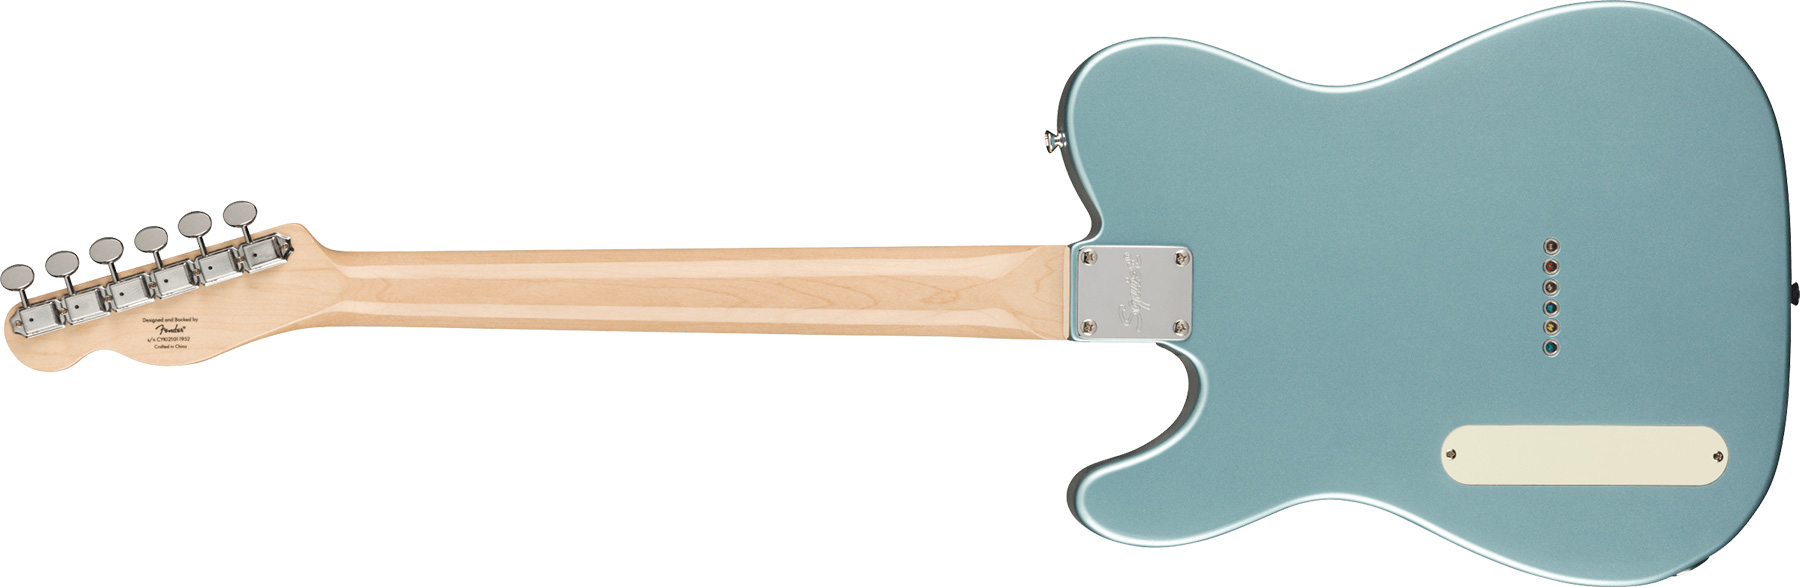 Squier Tele Cabronita Thinline Mint Pickguard Paranormal Fsr 2s Ht Lau - Ice Blue Metallic - Tel shape electric guitar - Variation 1